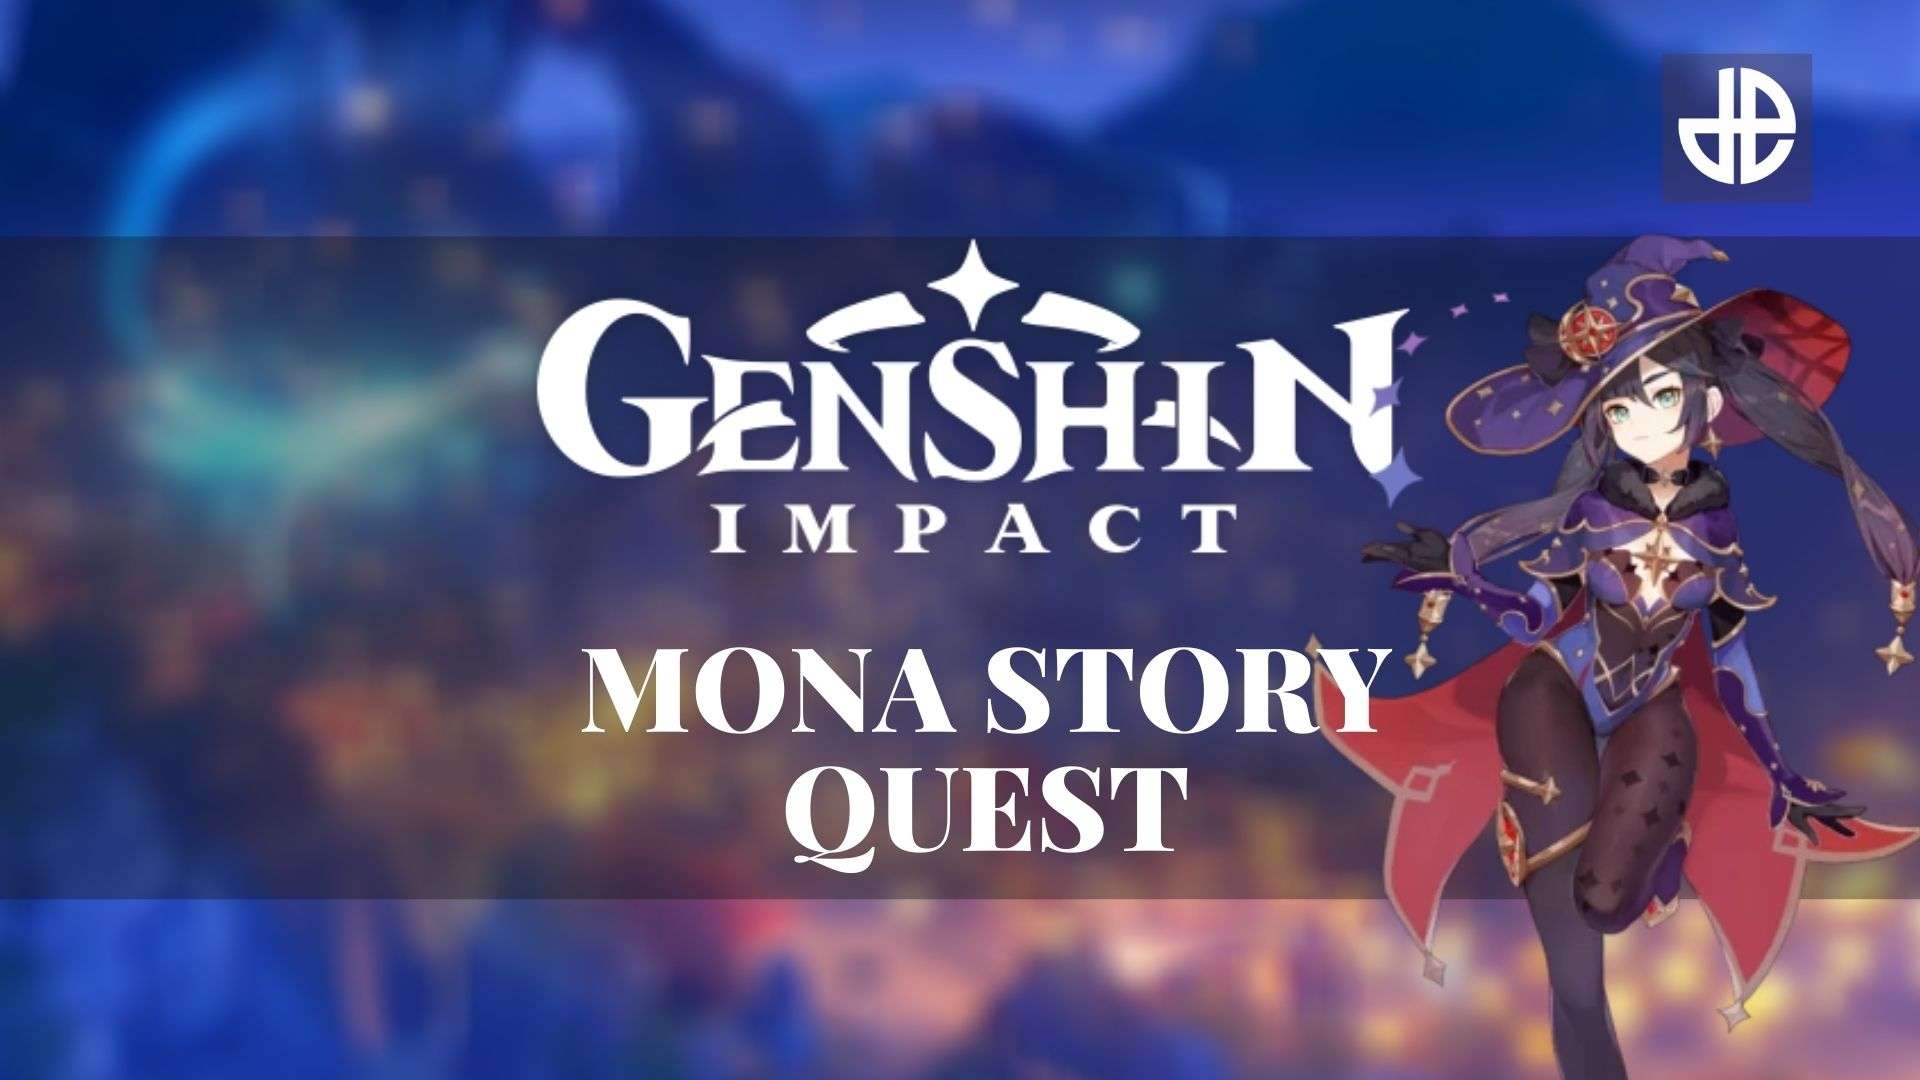 Mona Story Quest Genshin Impact